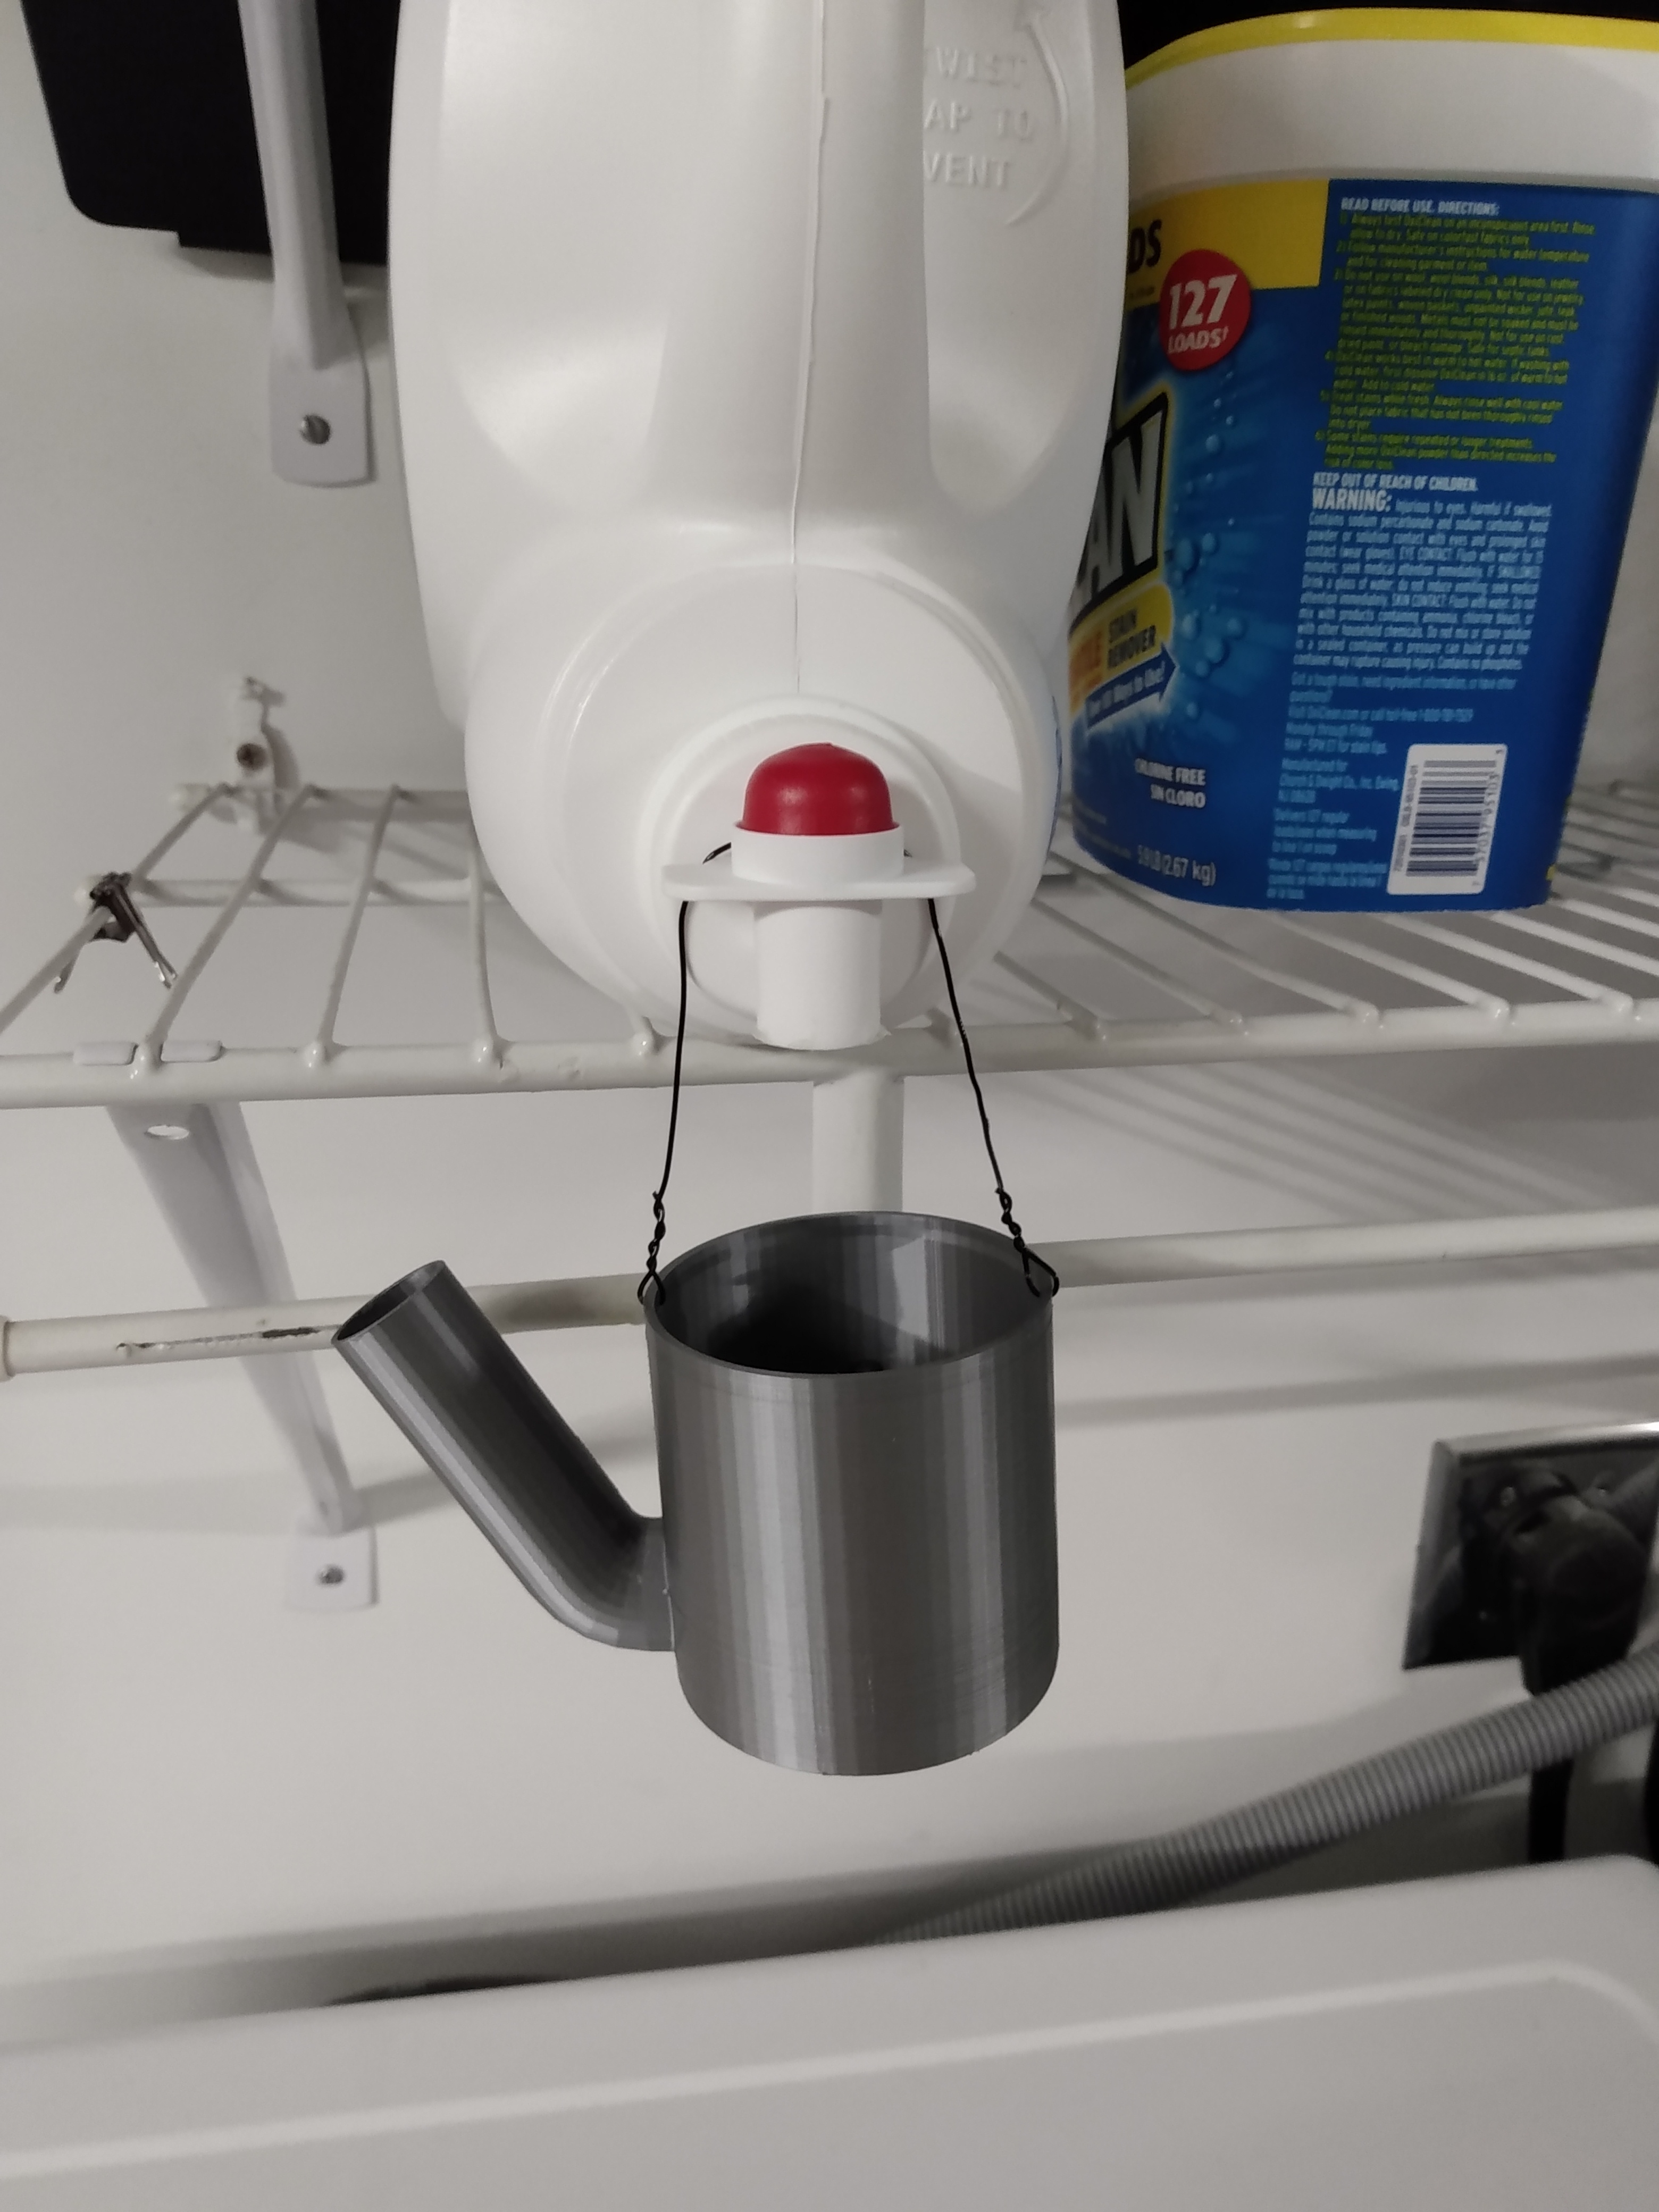 Laundry Detergent Cup